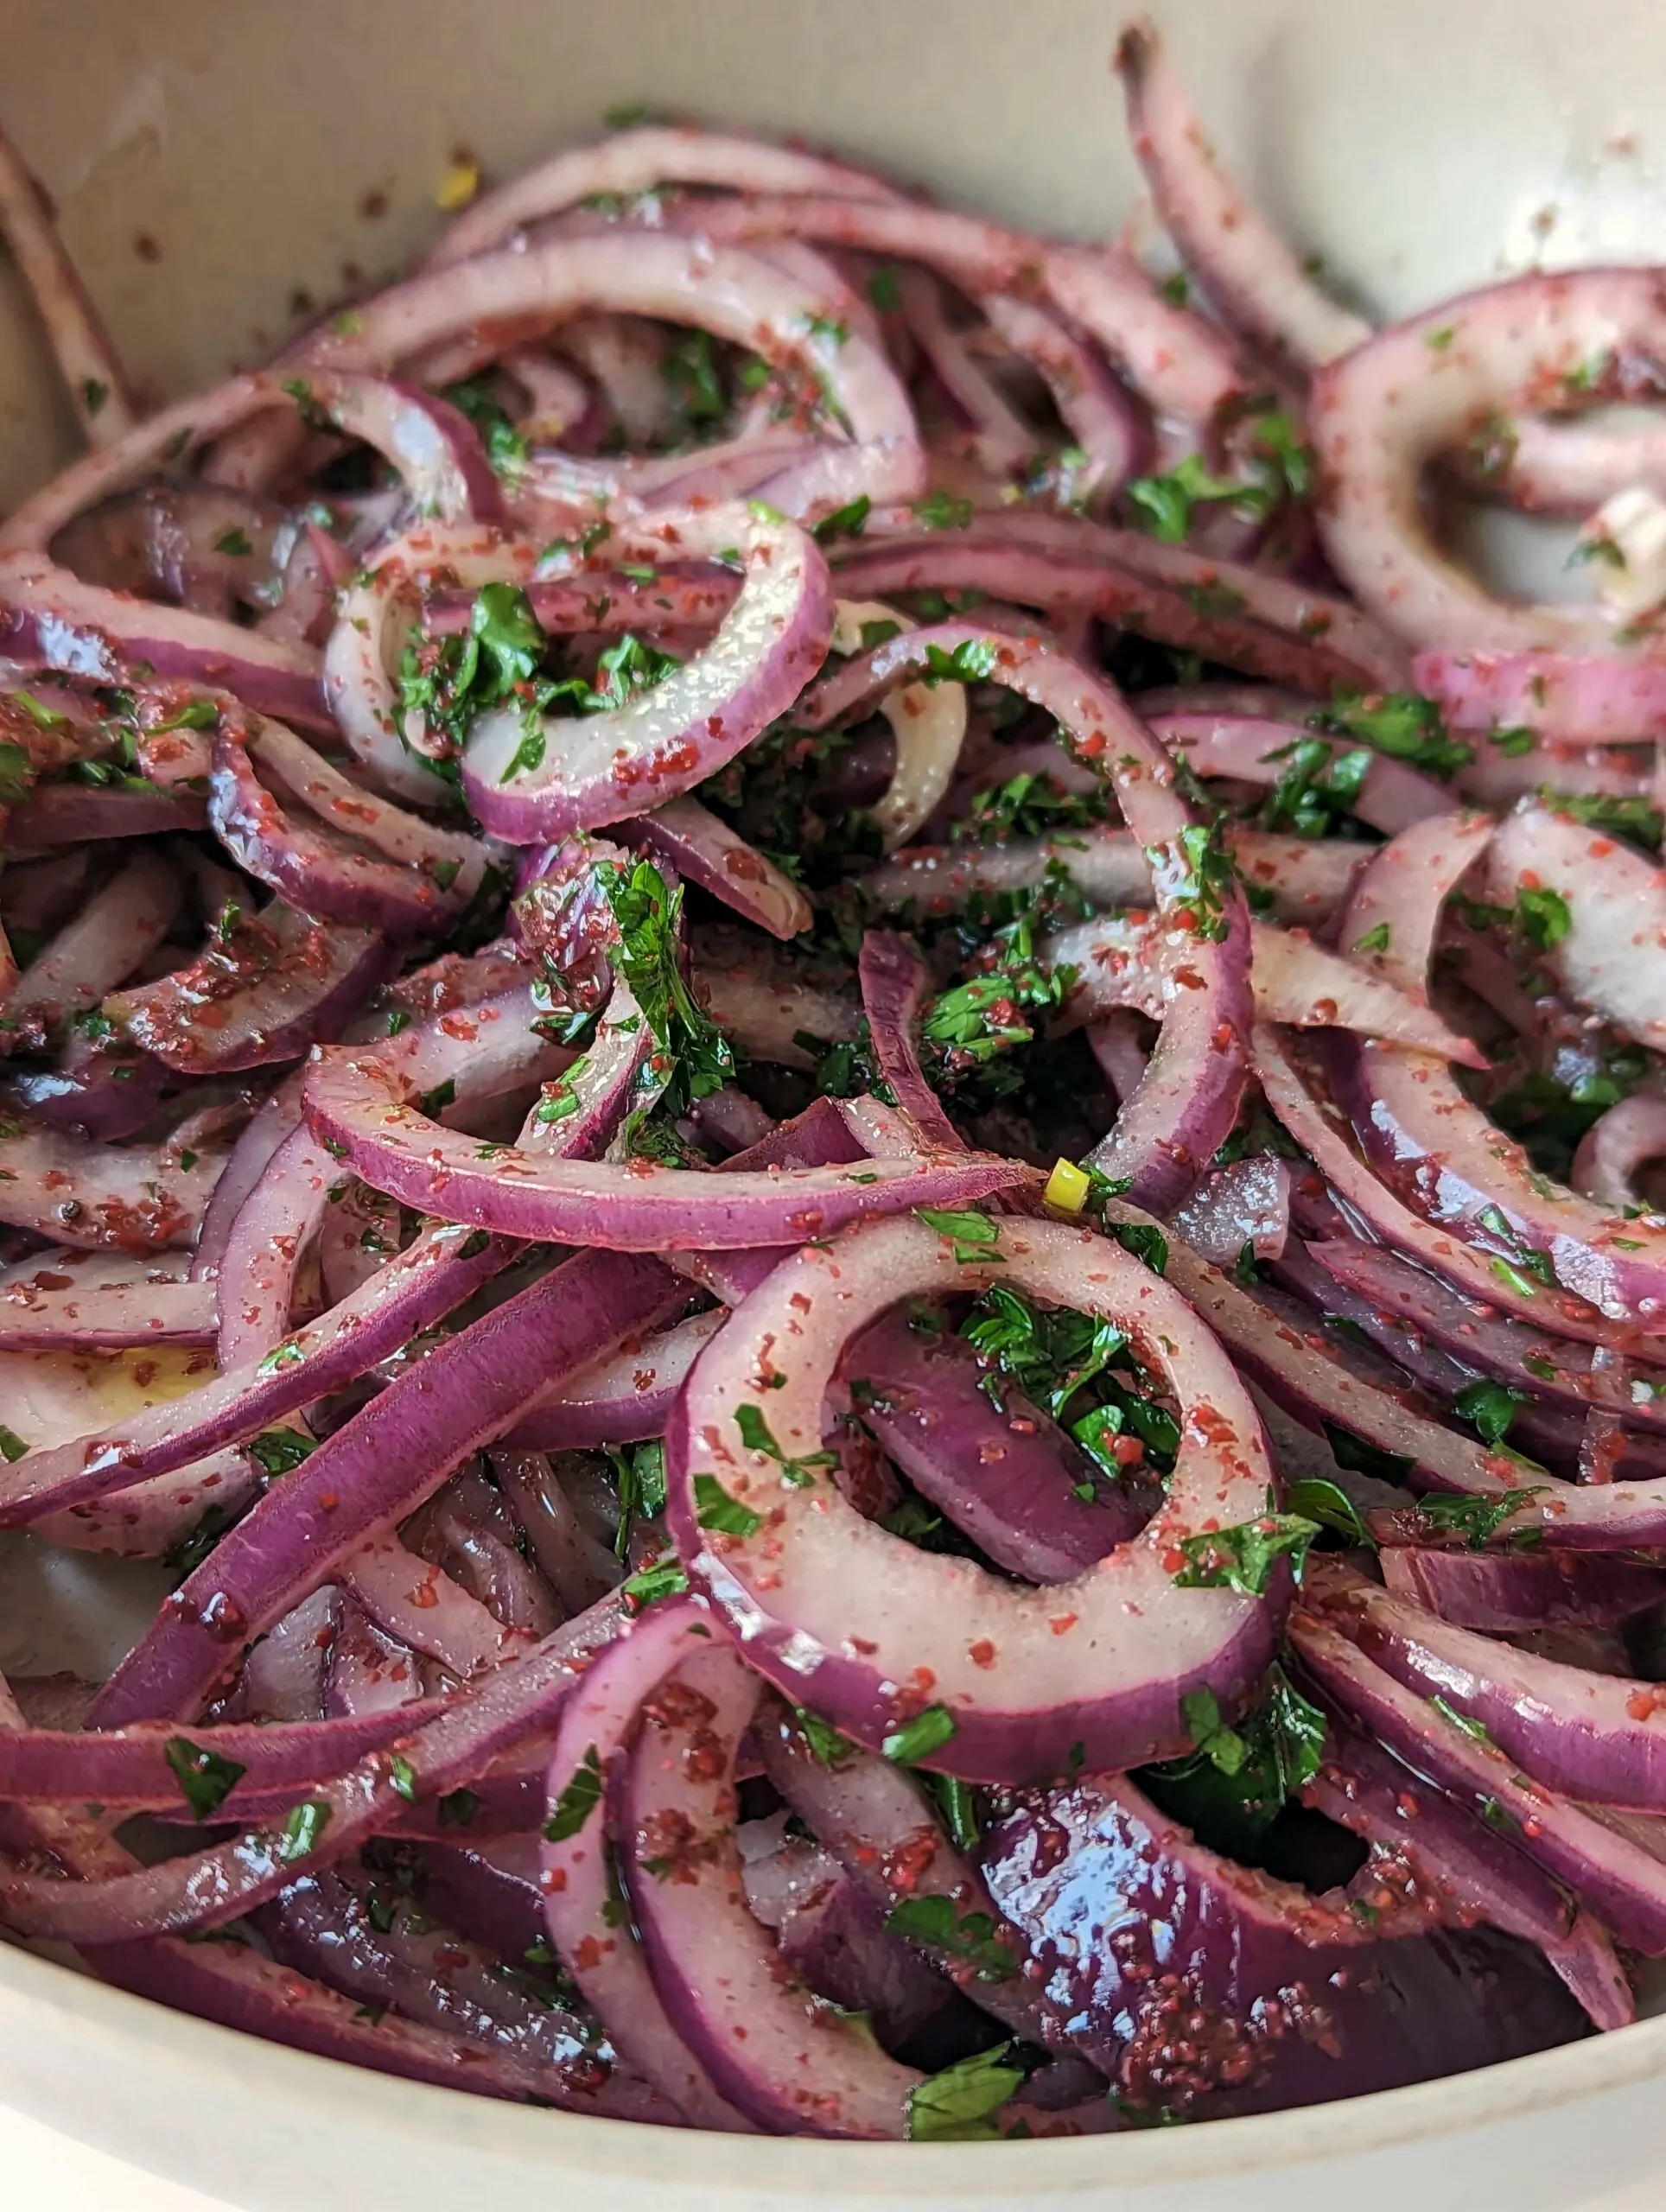 An up-close bowl of sumac onions.